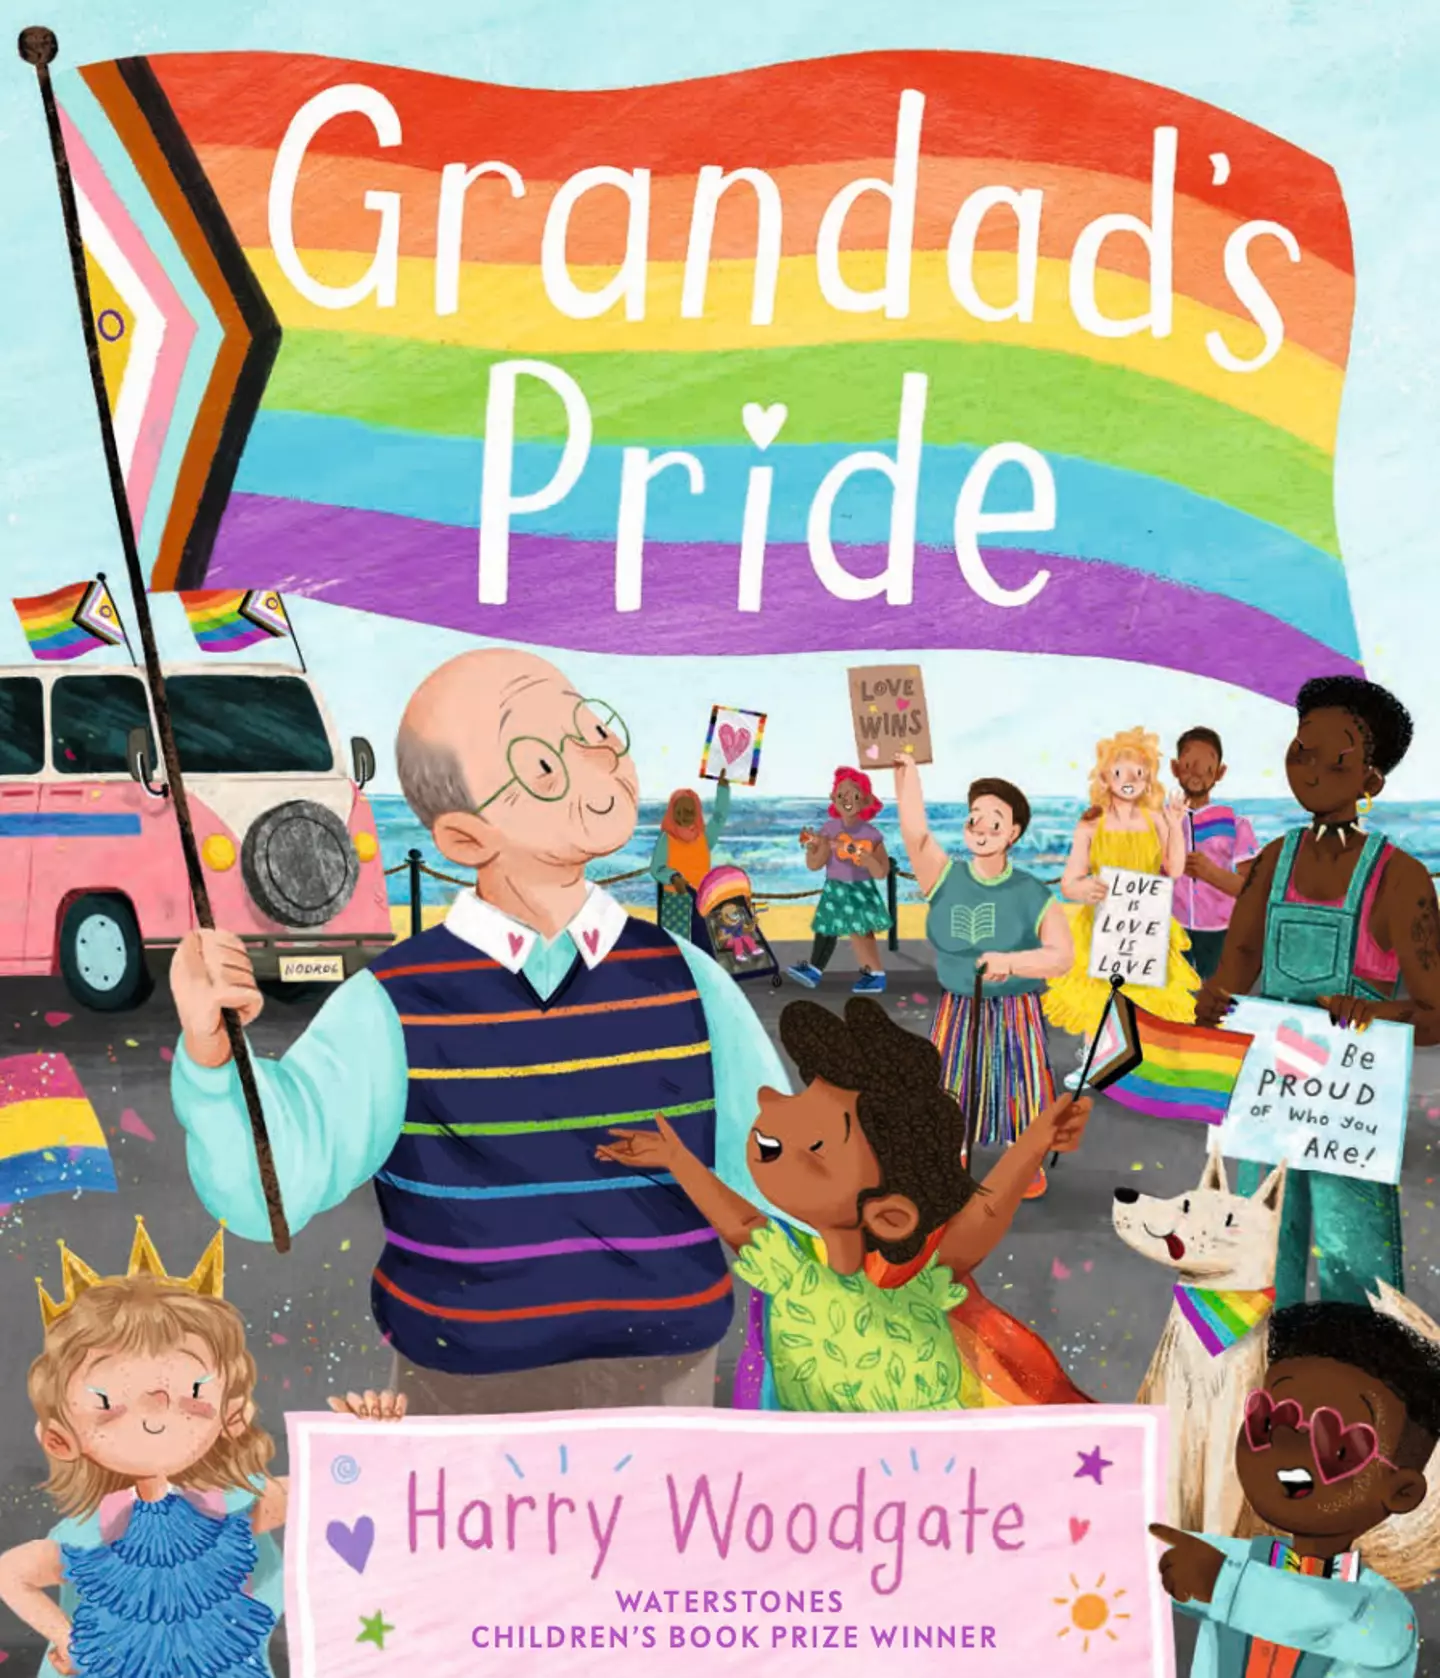 The 'erotic' image was featured in the children's book, Grandad's Pride.